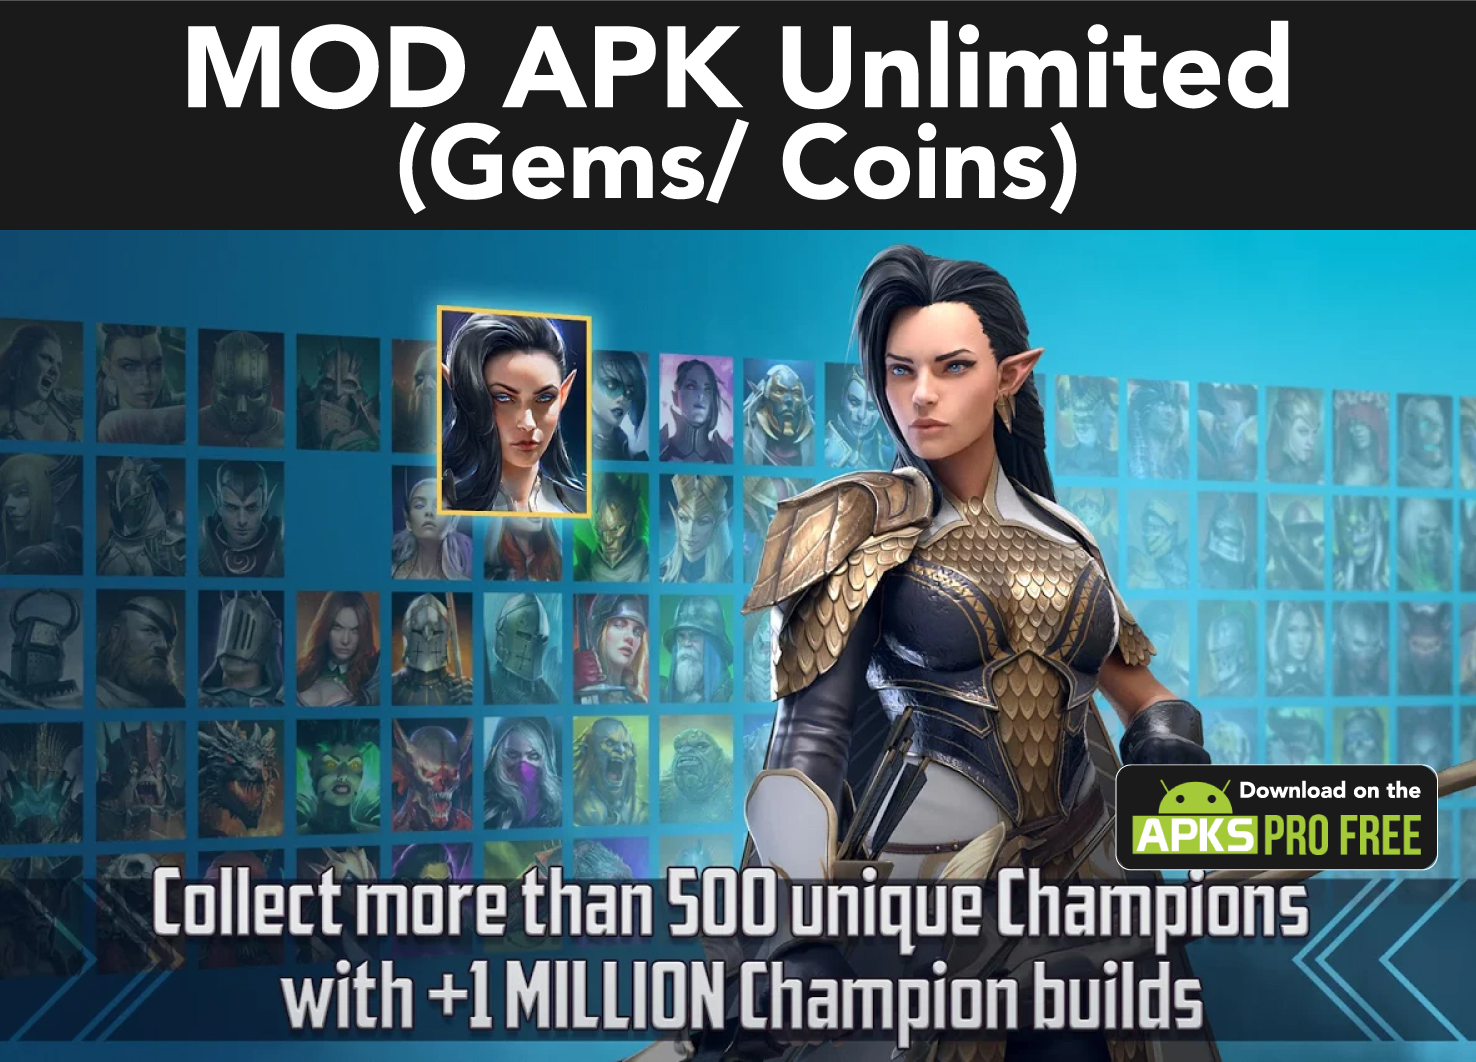 raid: shadow legends mod apk unlimited money and gems download